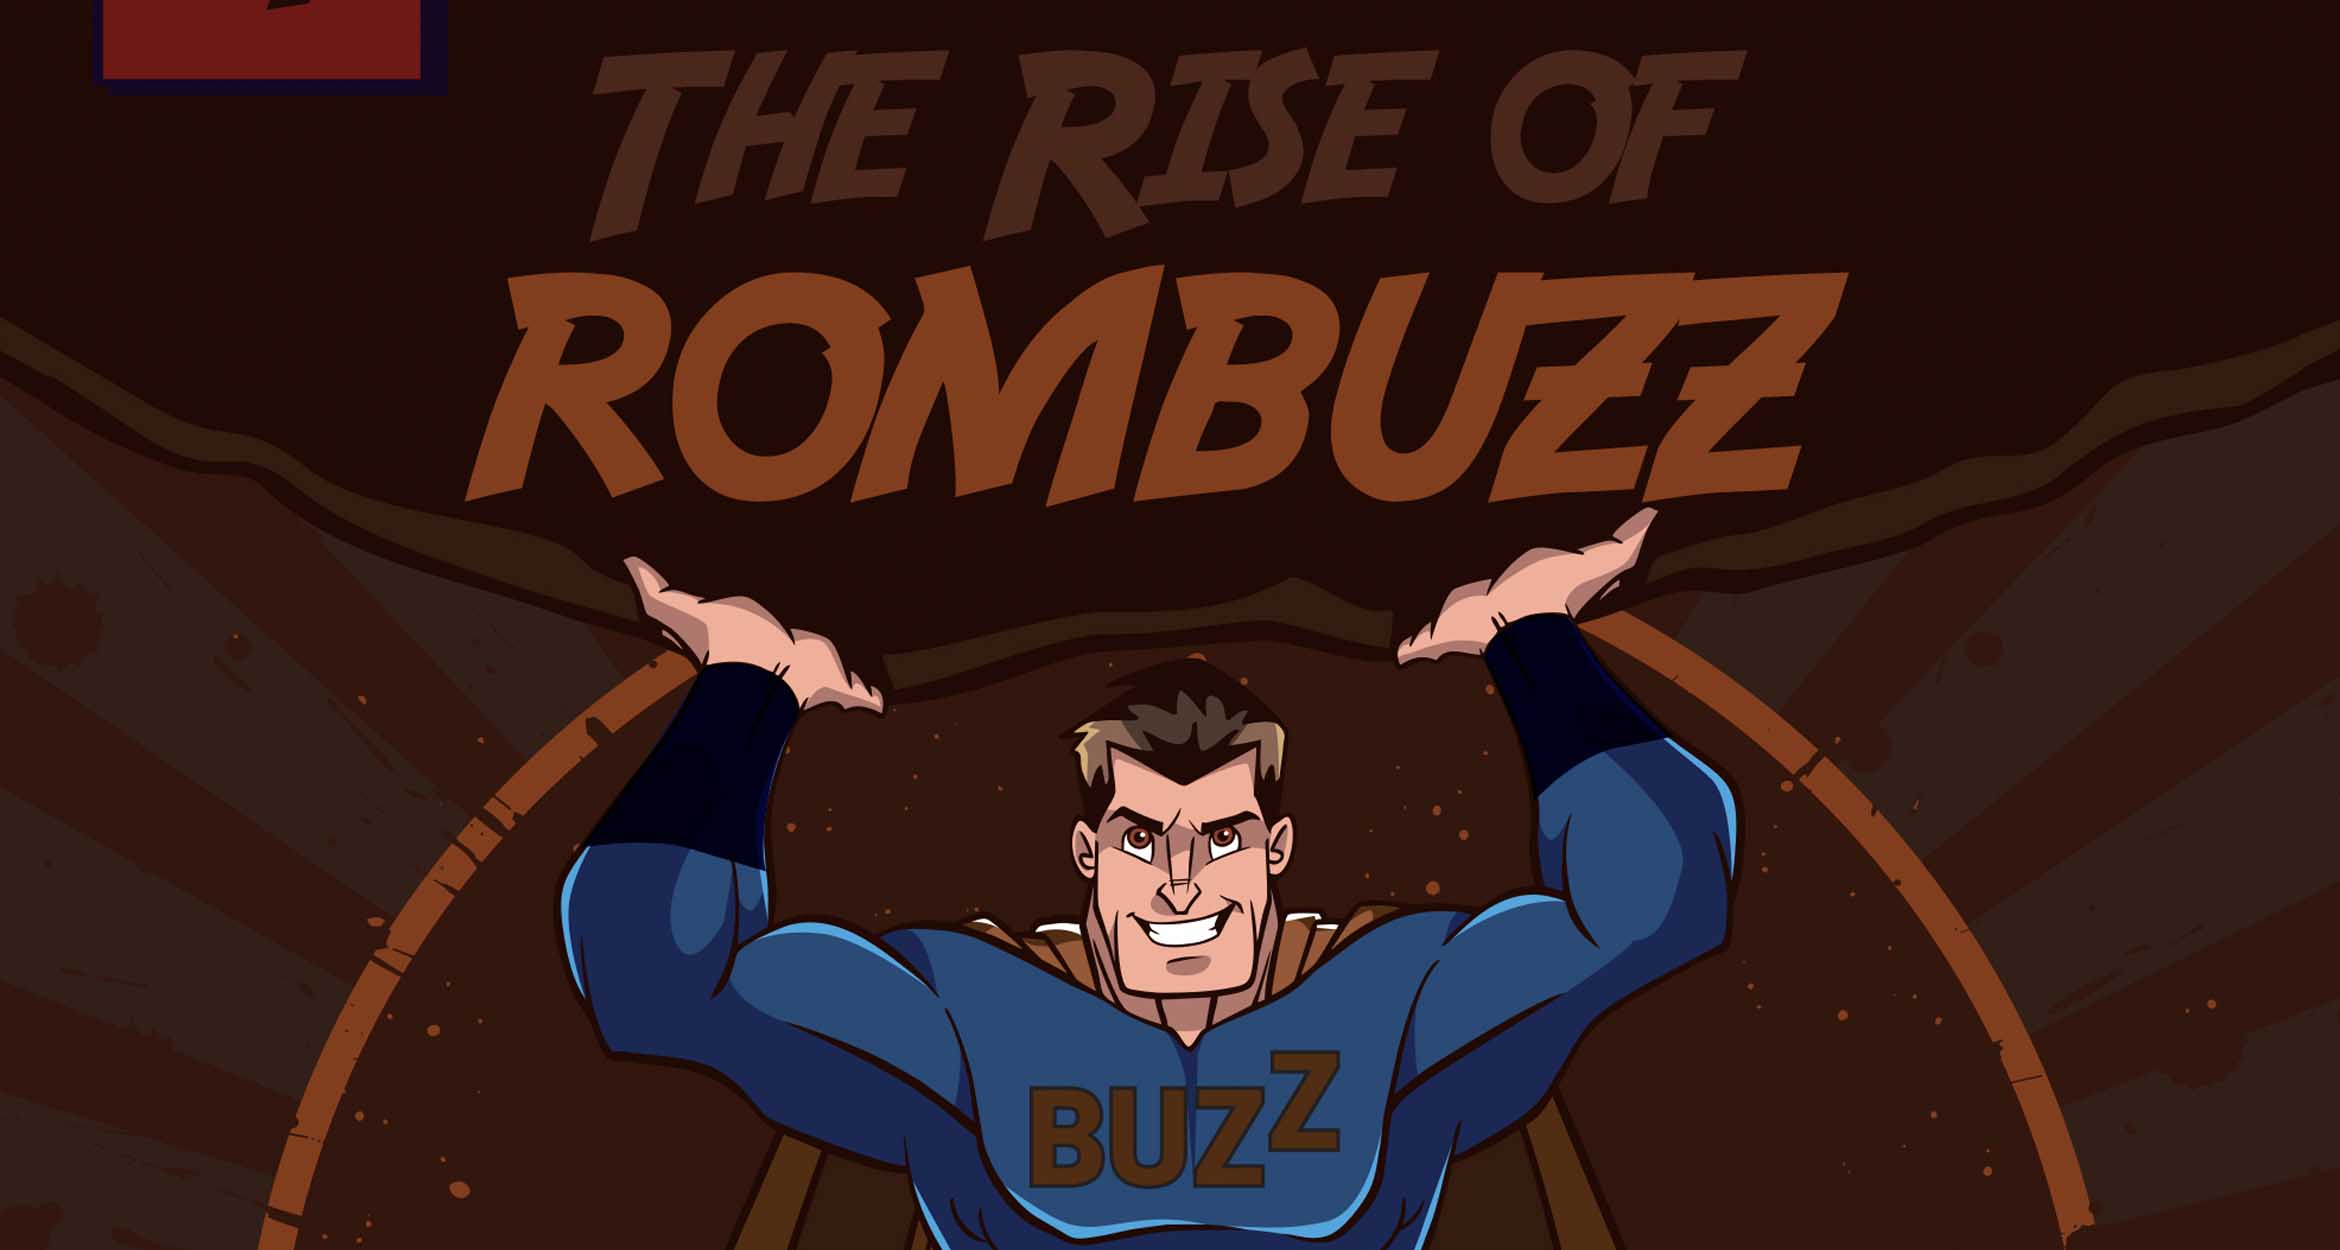 The Rise of ROMBUZZ superhero comic book cover 